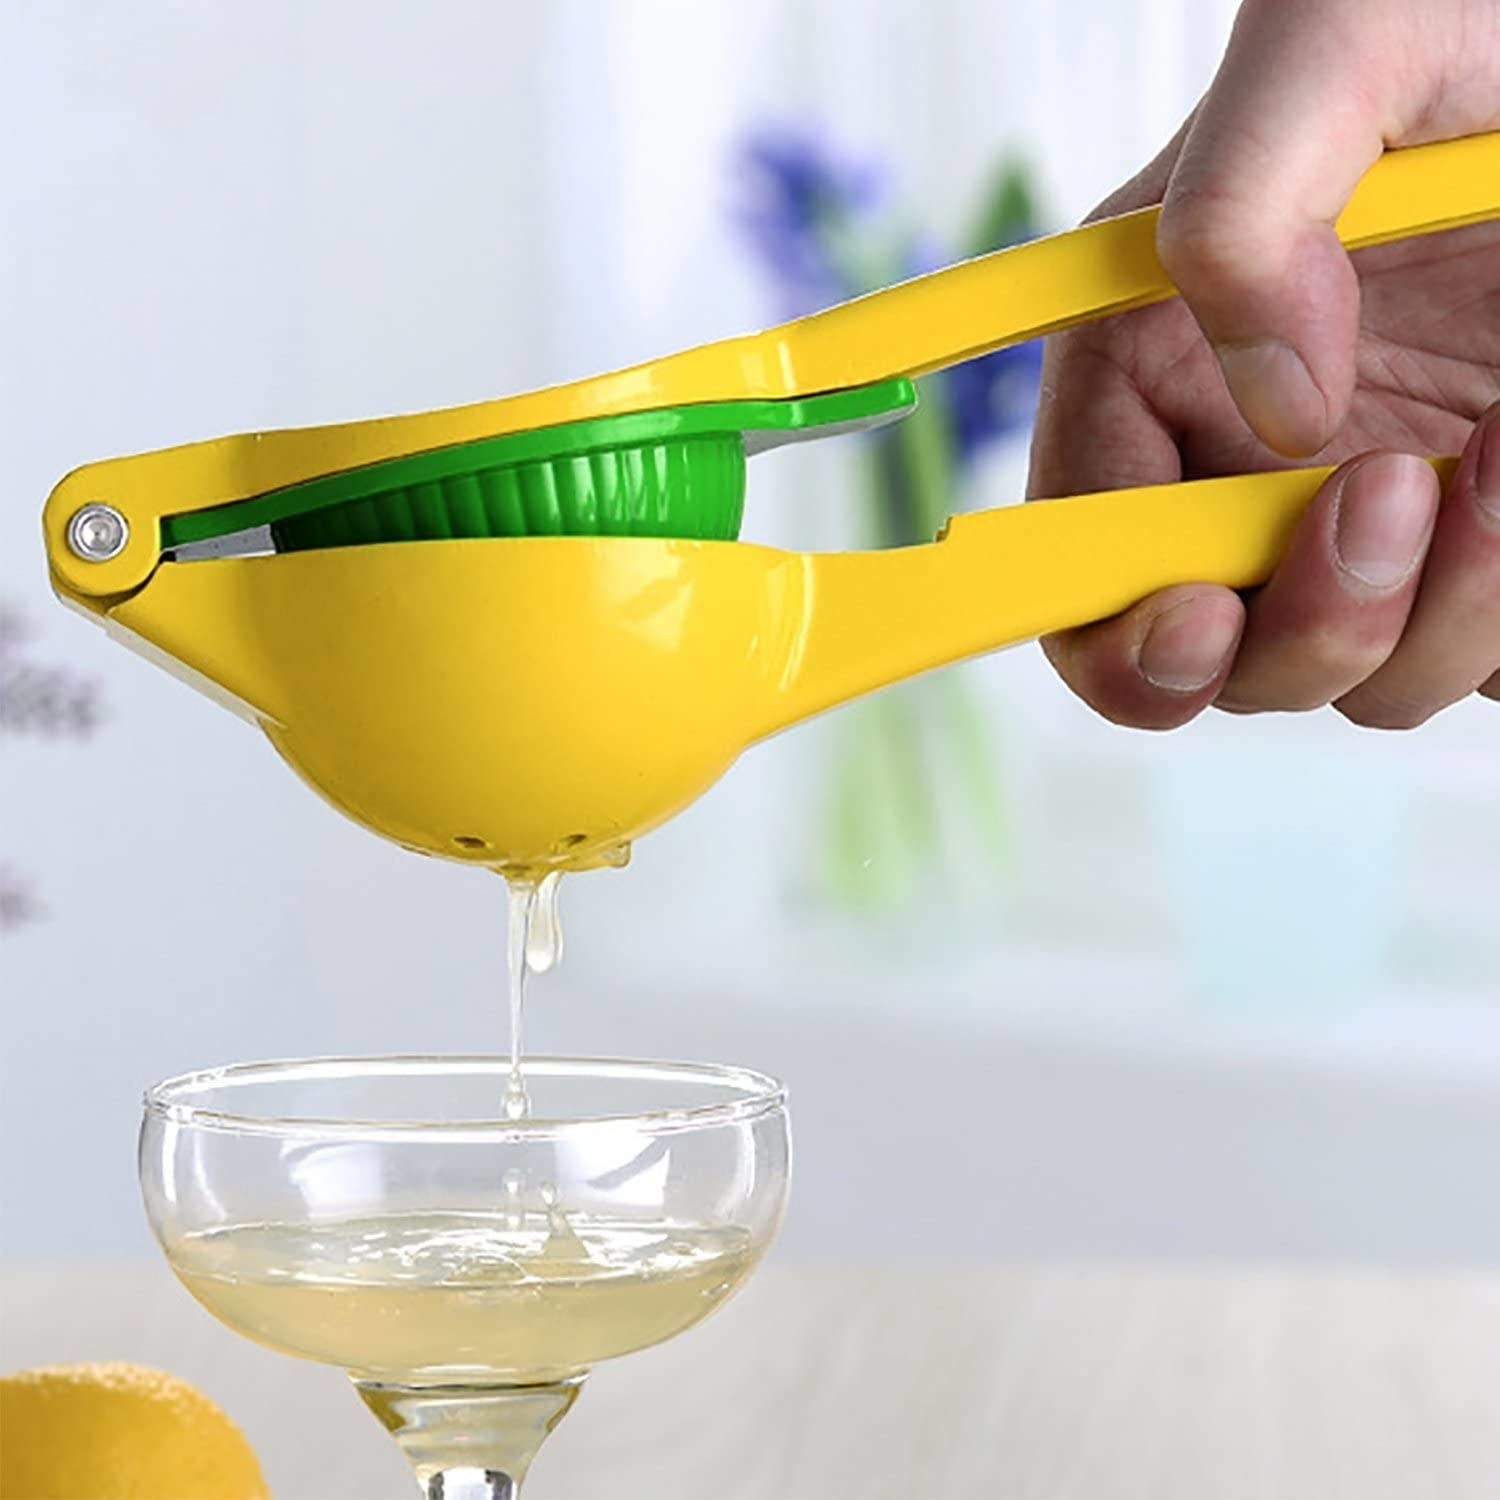 a person squeezing lemon juice into a coup